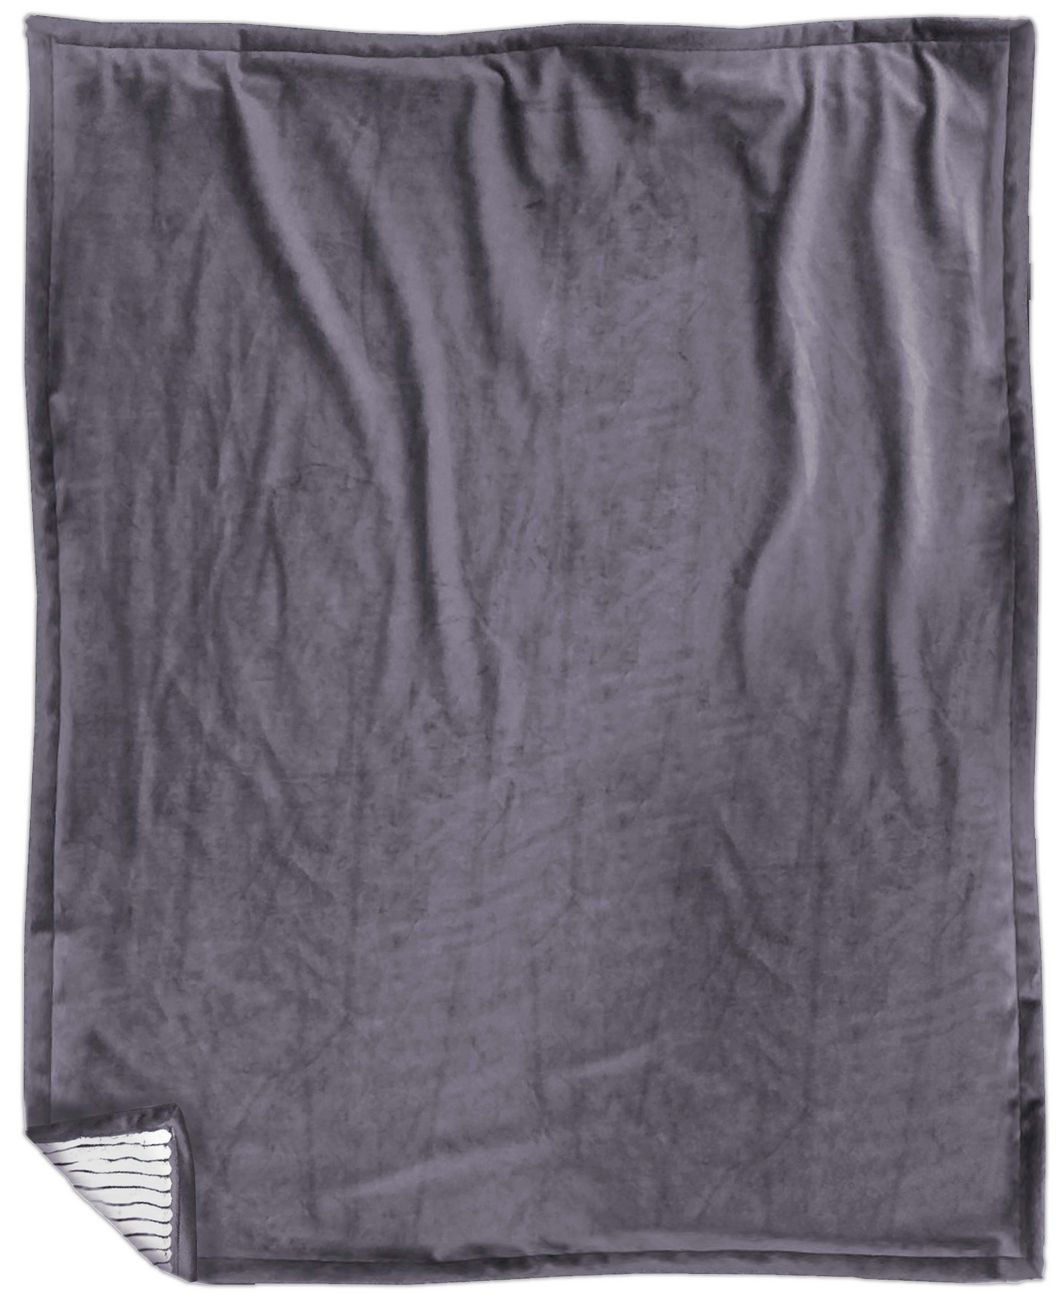 Towel Specialties. Regency Striped Blanket™